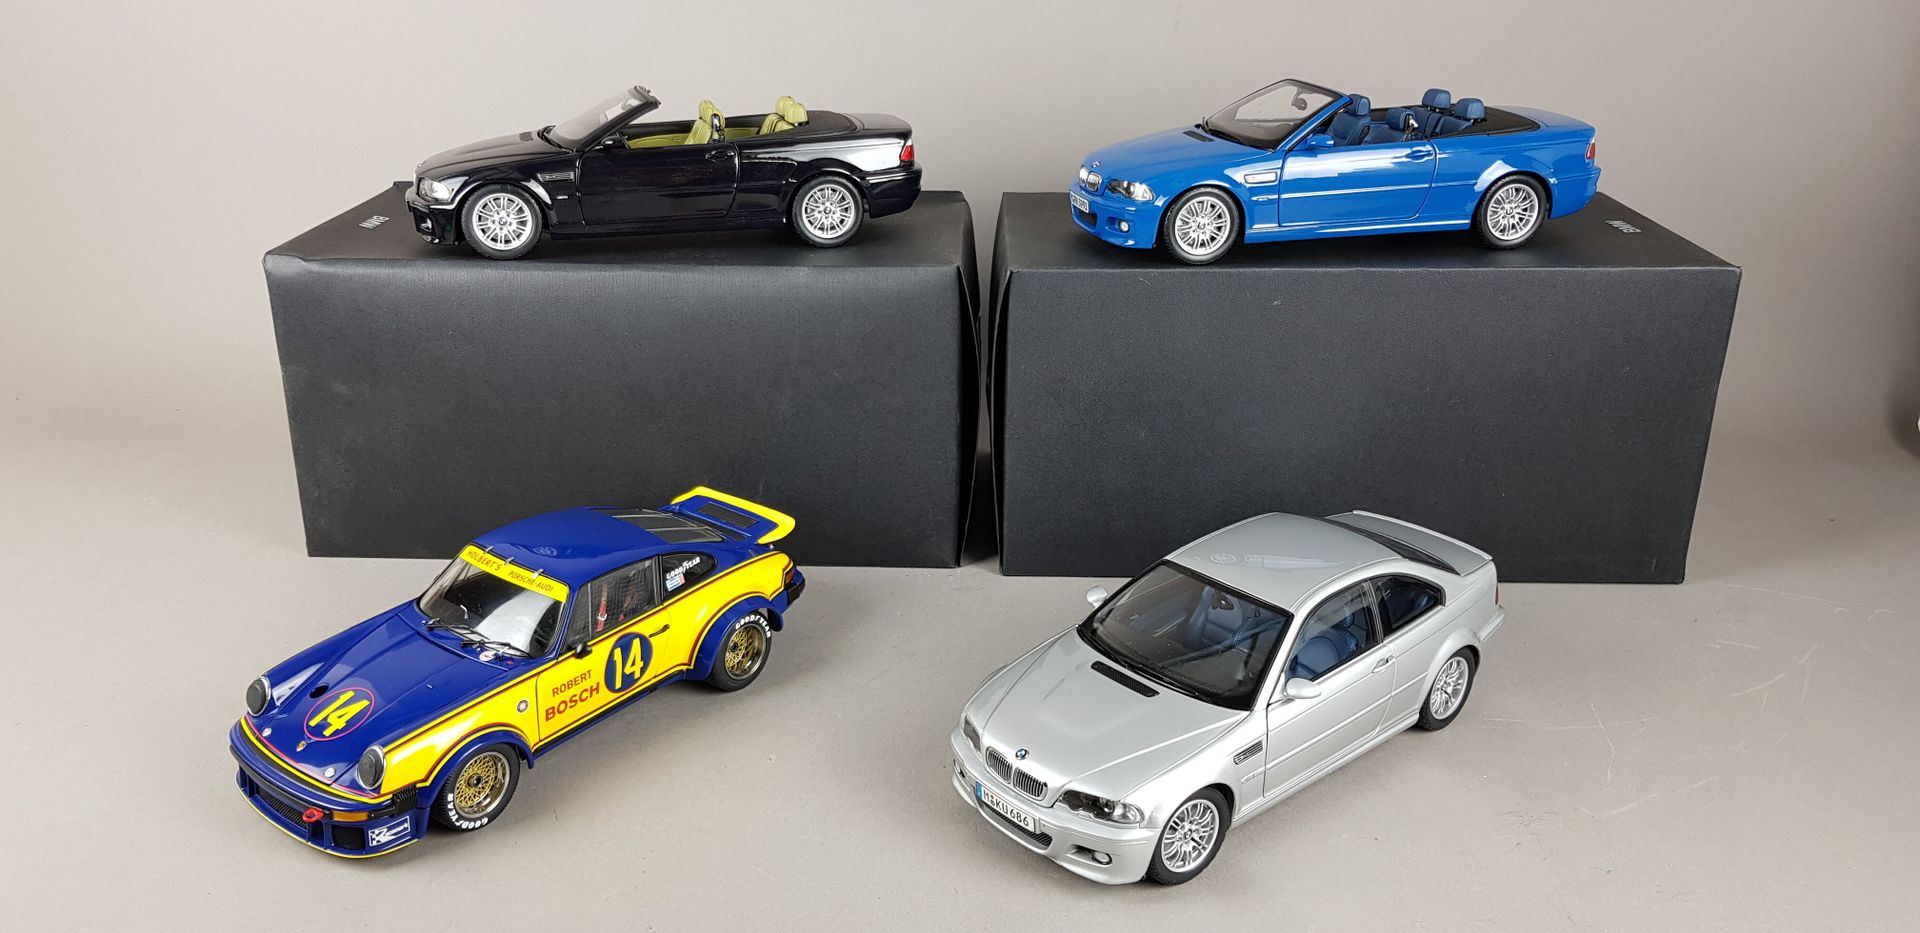 Null VIER CARS im Maßstab 1/18:

1x BMW M3 Coupé

2x BMW M3 Cabrio

1x Rennsport&hellip;